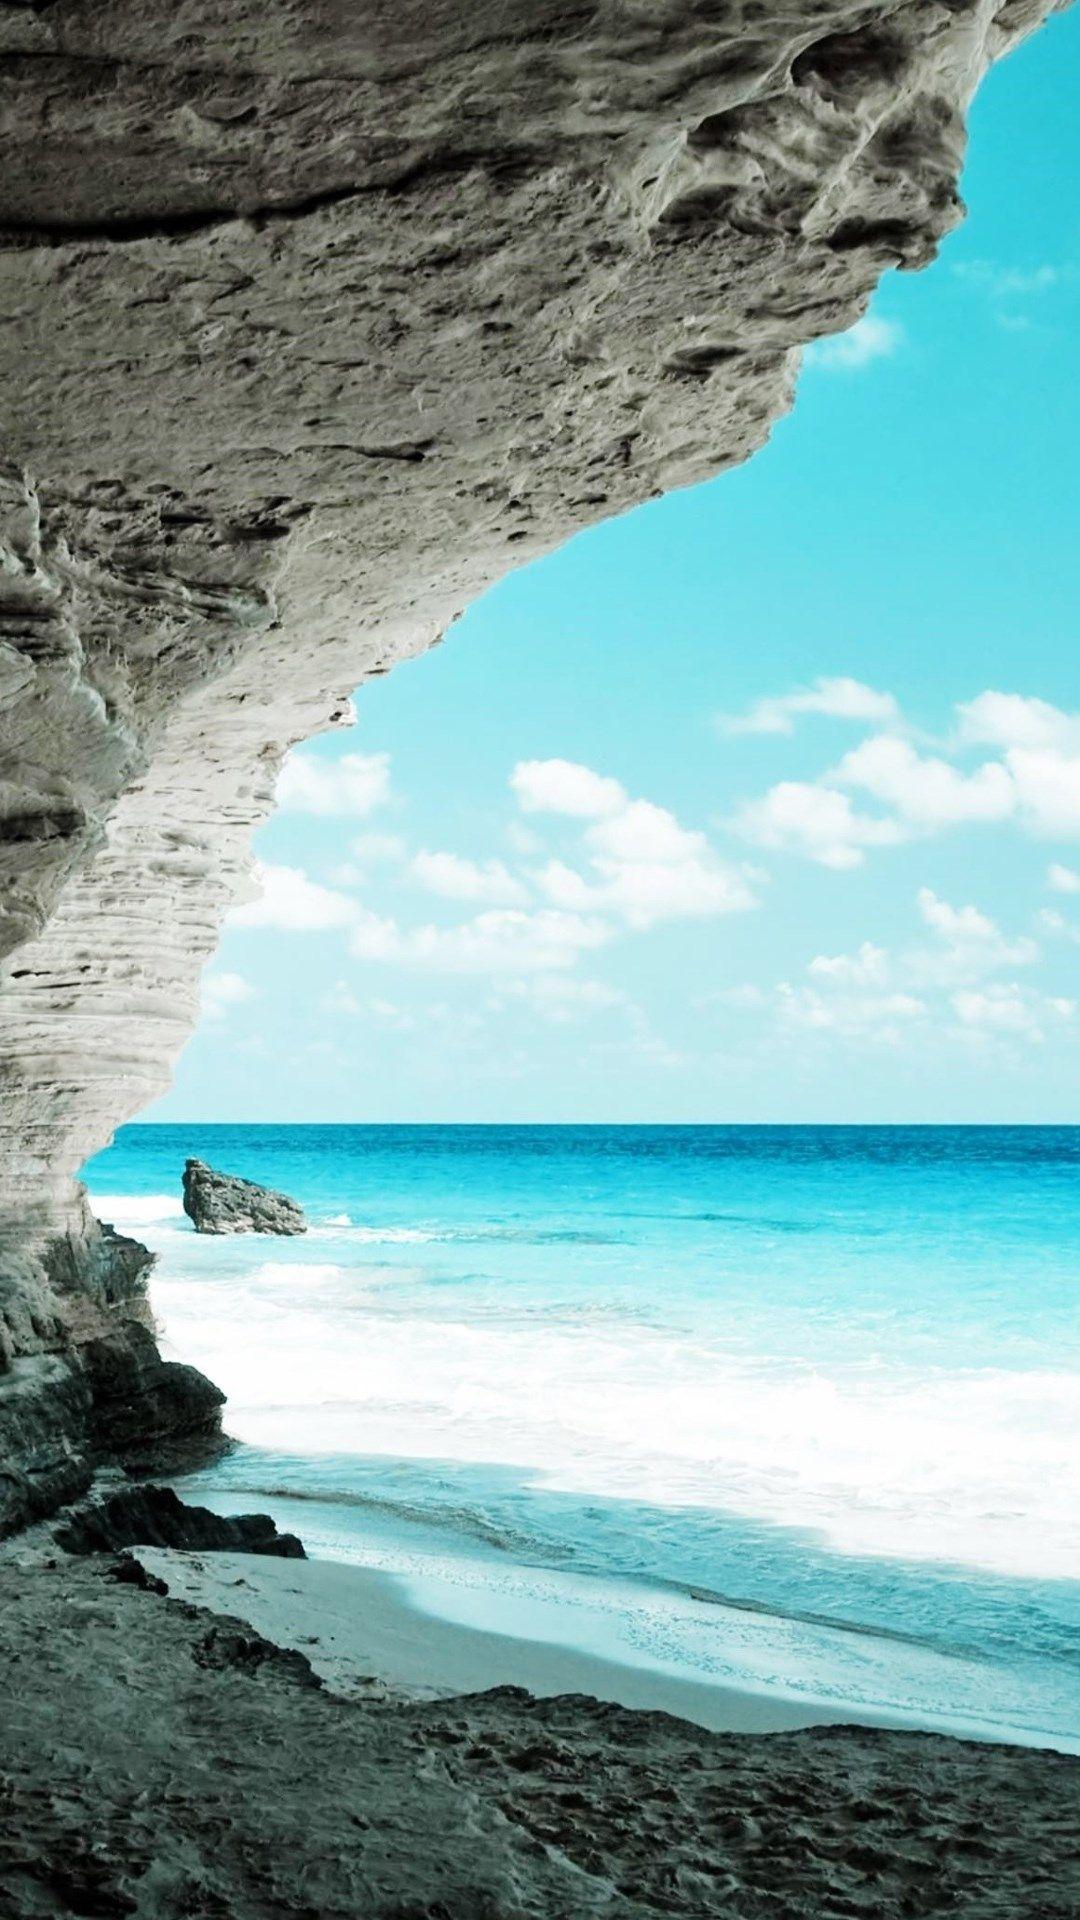 Beach View. Paradise iPhone Wallpaper #underwater #sea